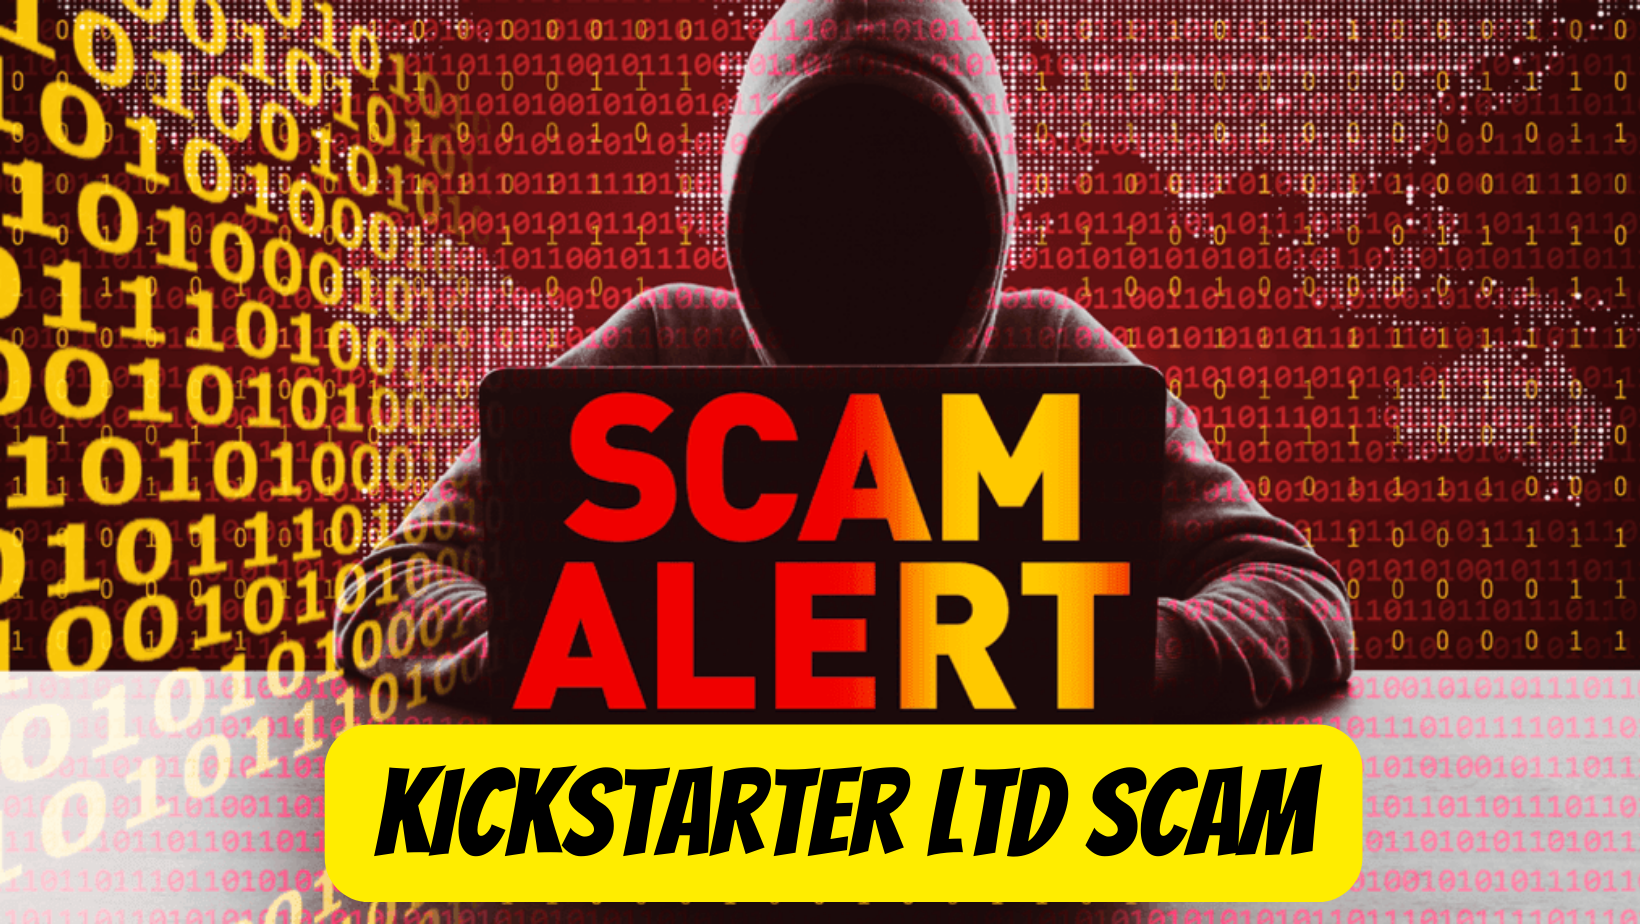 WhatsApp Users Beware: Kickstarter Ltd Scam - Alert!!